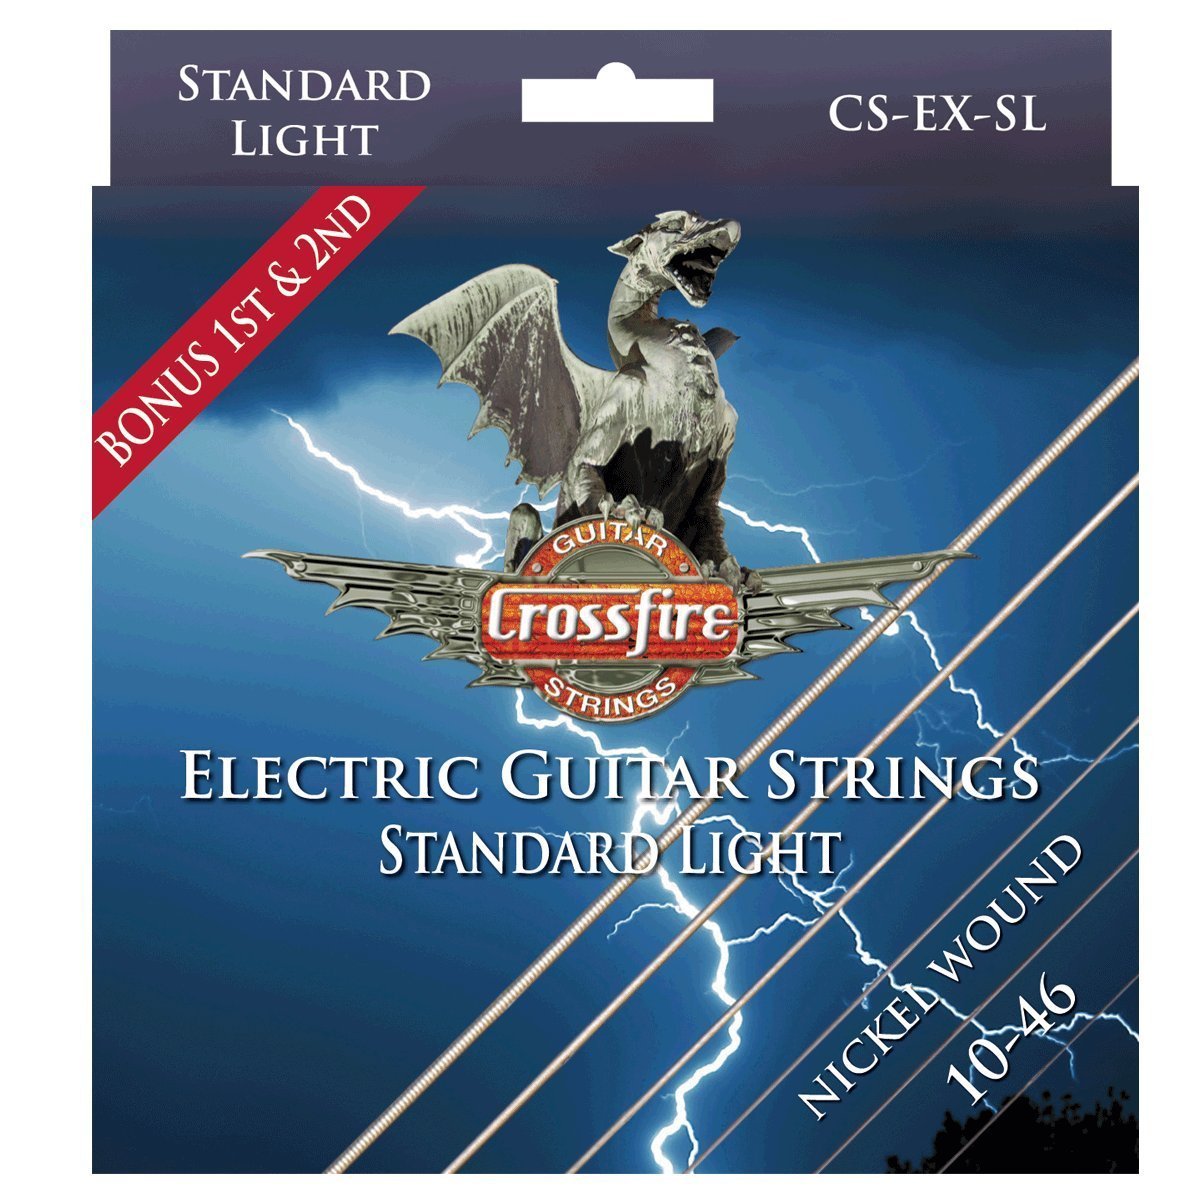 Crossfire Light Electric Guitar Strings (10-46)-CS-EX-SL